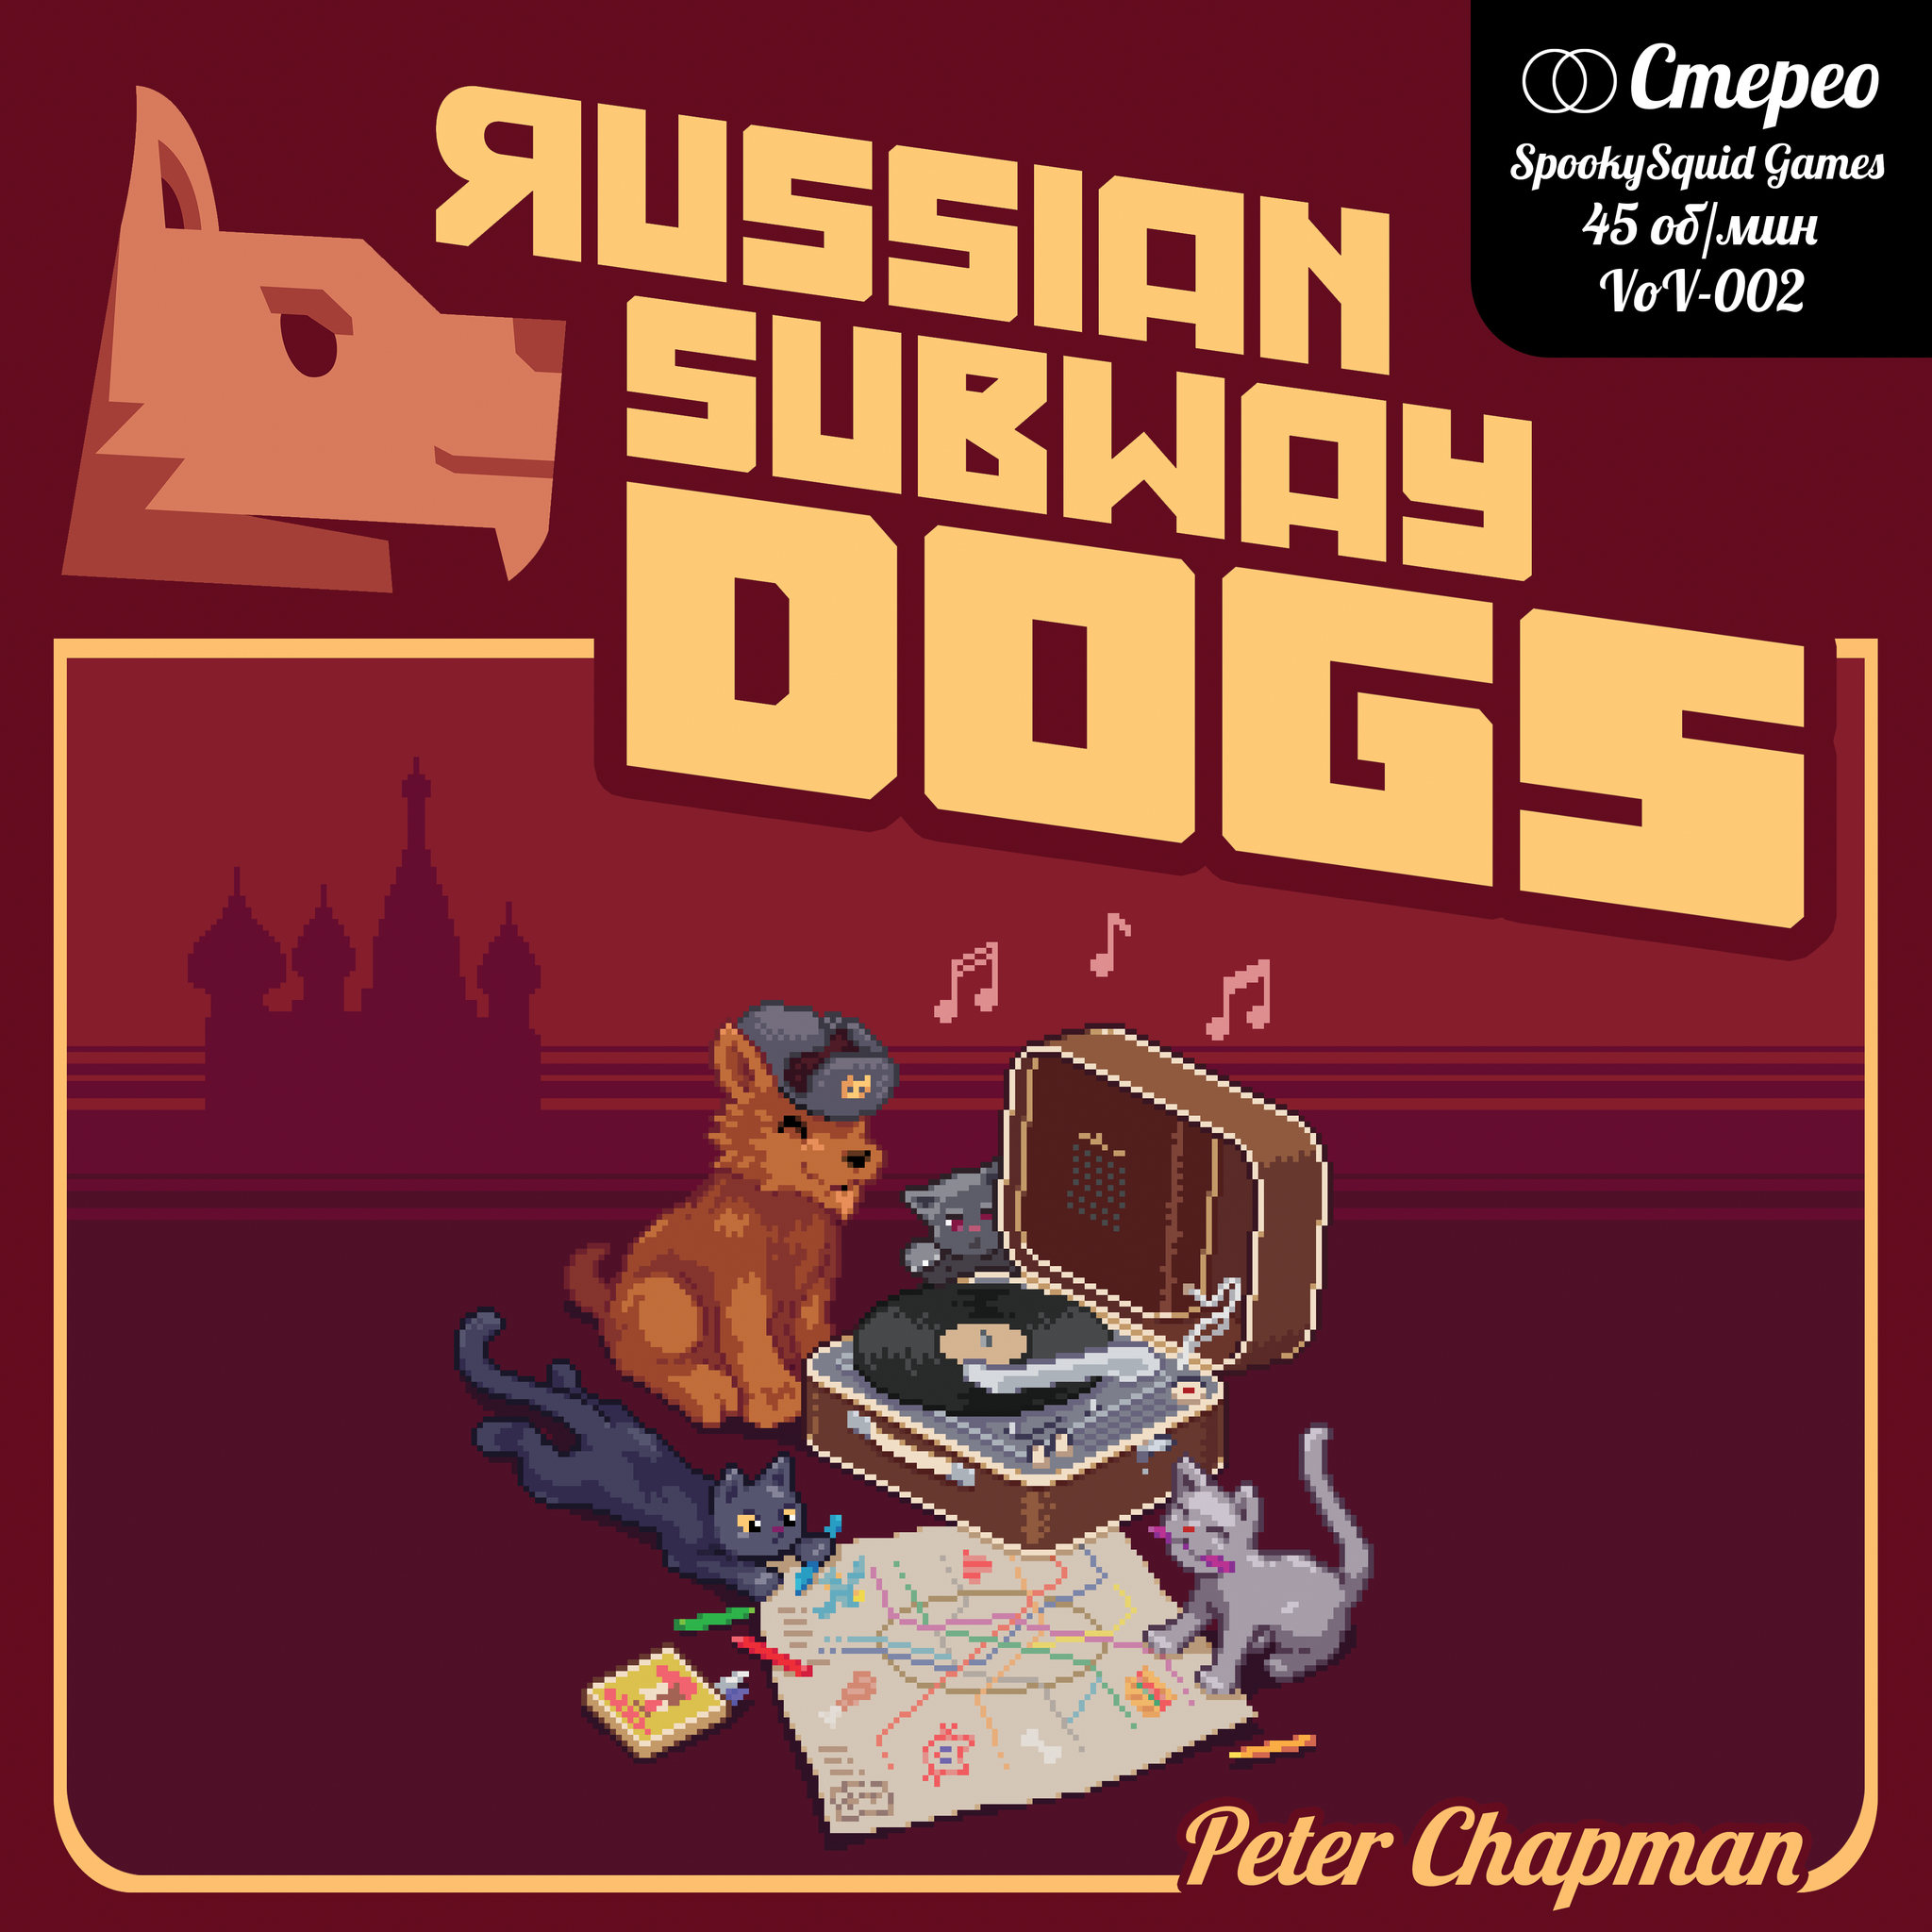 Russian Subway Dogs Original Soundtrack